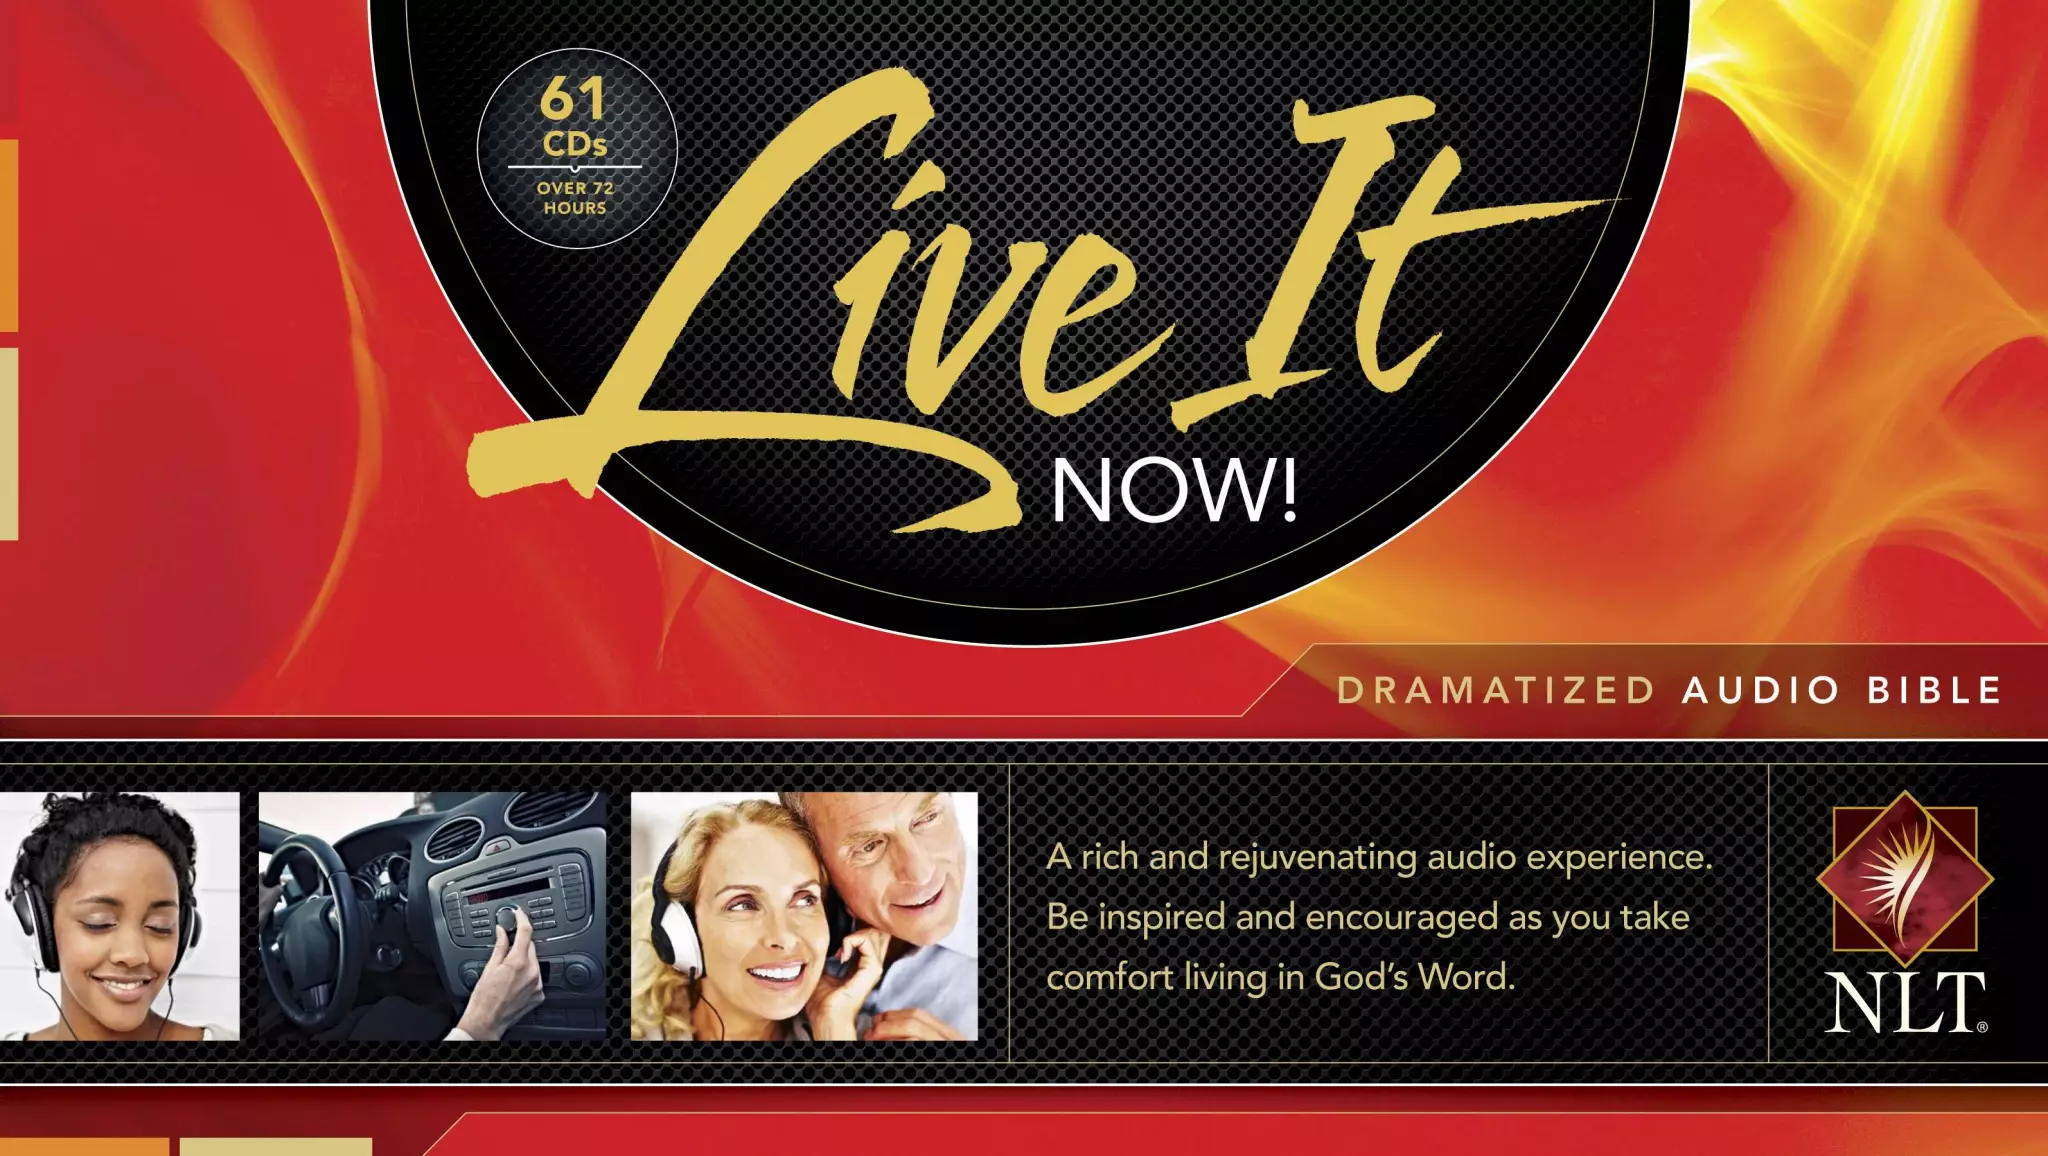 NLT Live It Now Dramatized Audio Bible CD